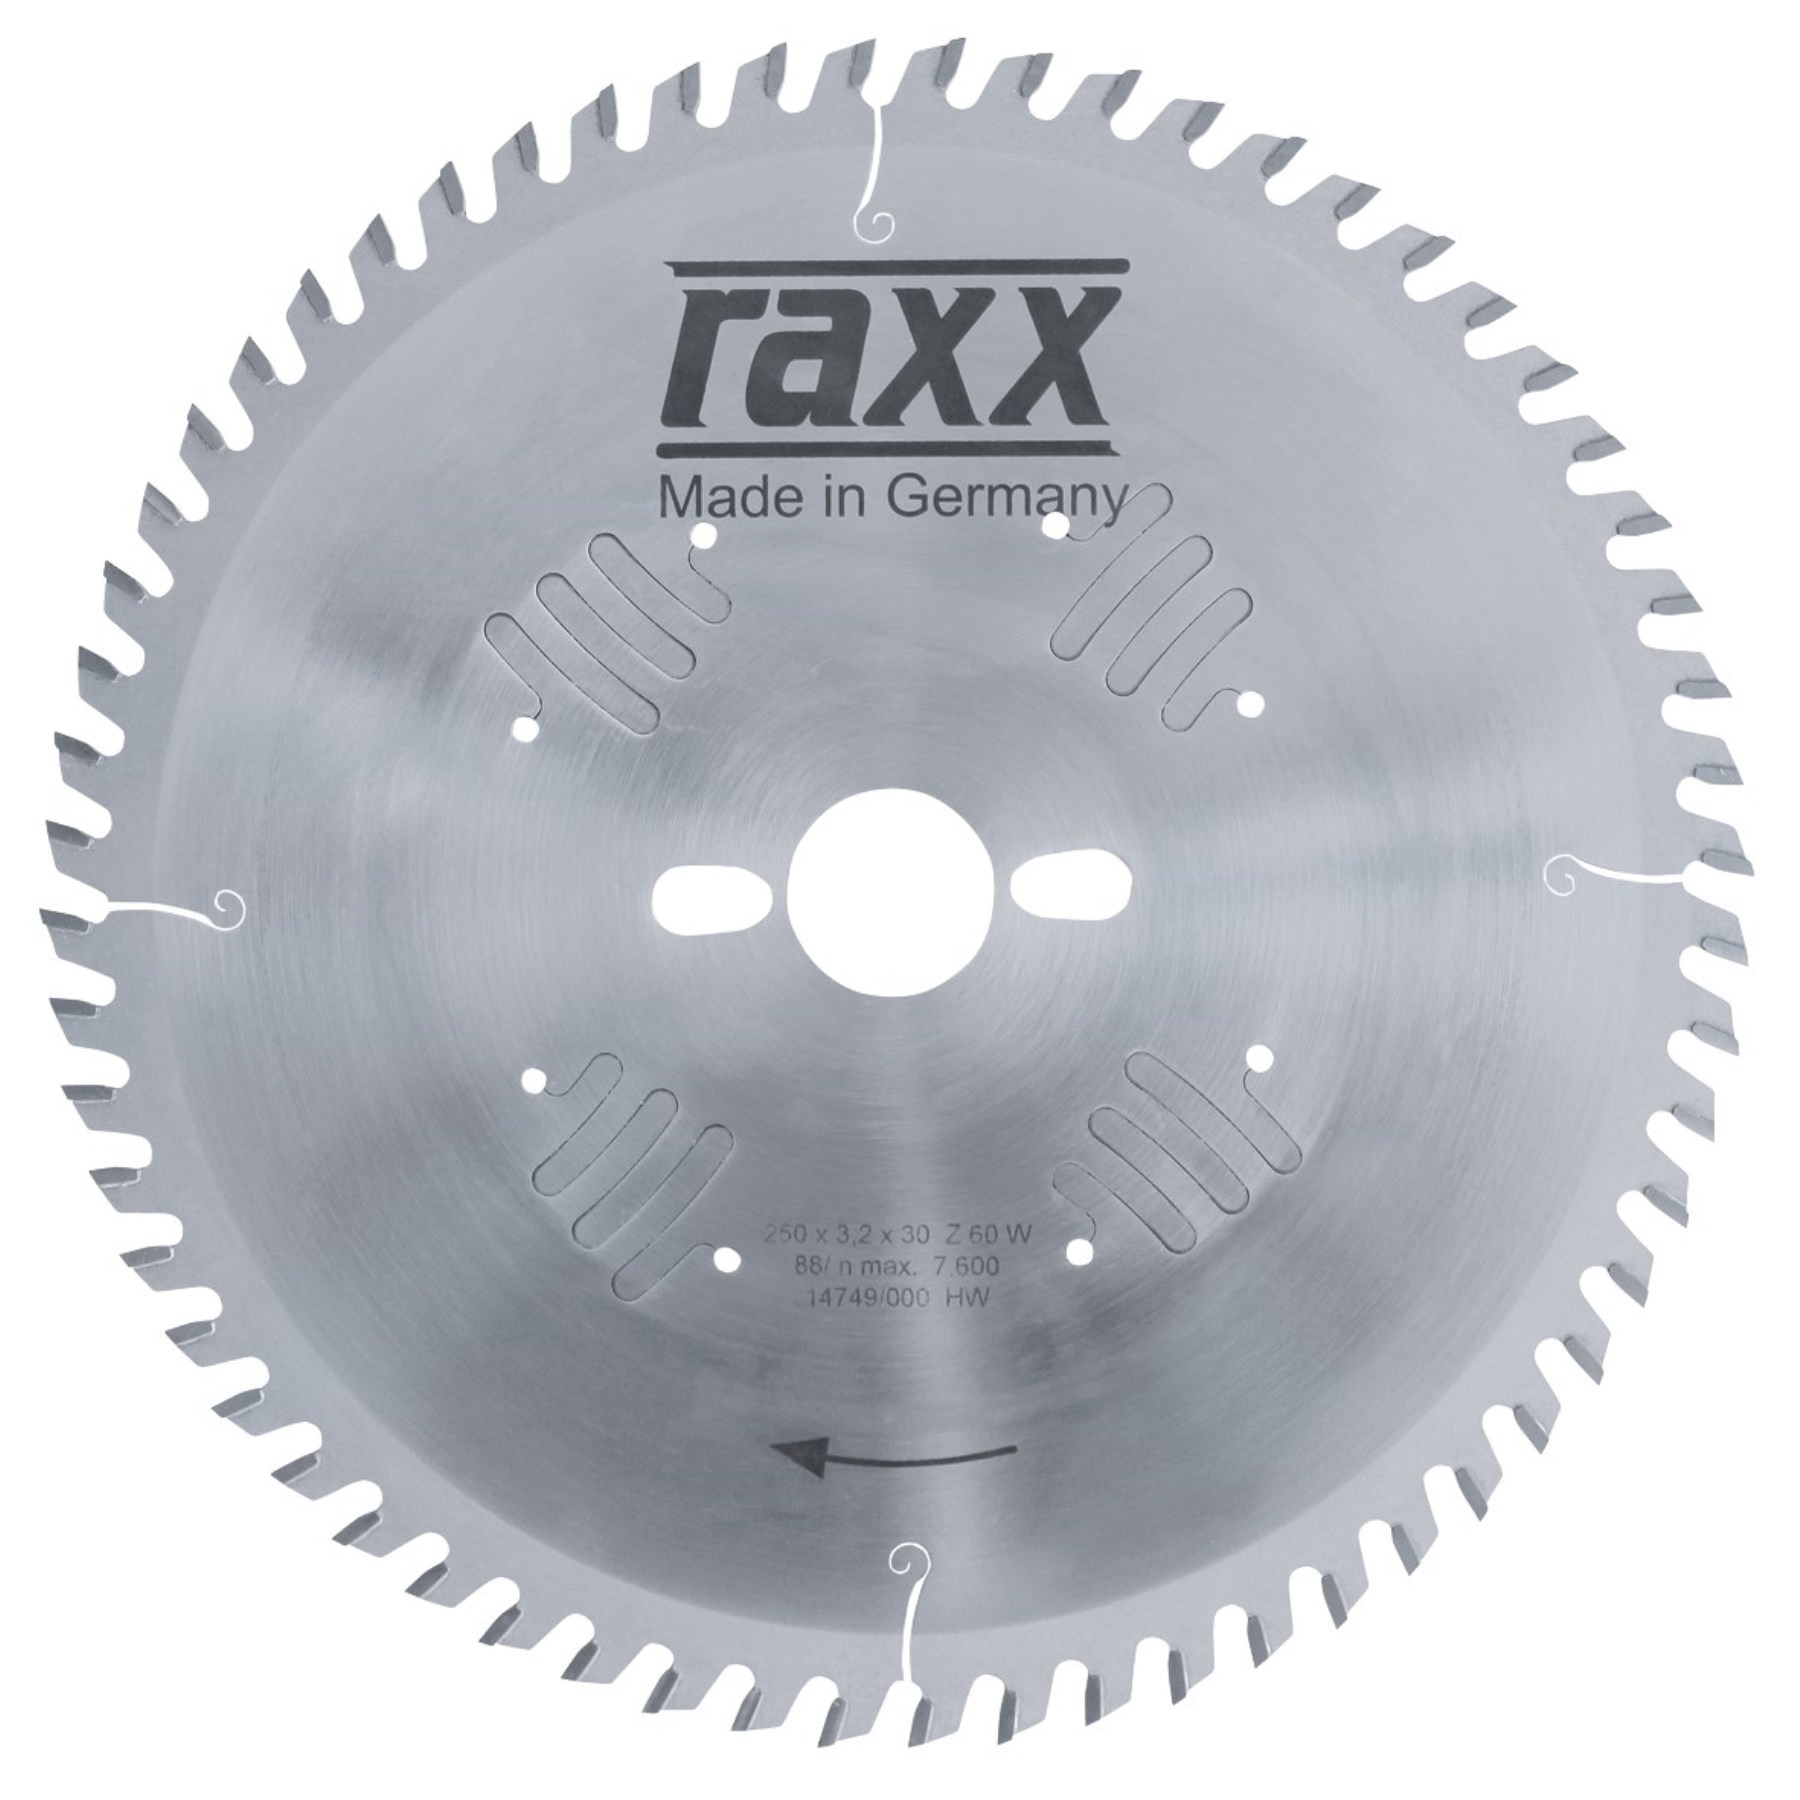 RAXX 1205070 kotouč k okružní pile HM 300x3,2x30 [ 56300300960060400 ]